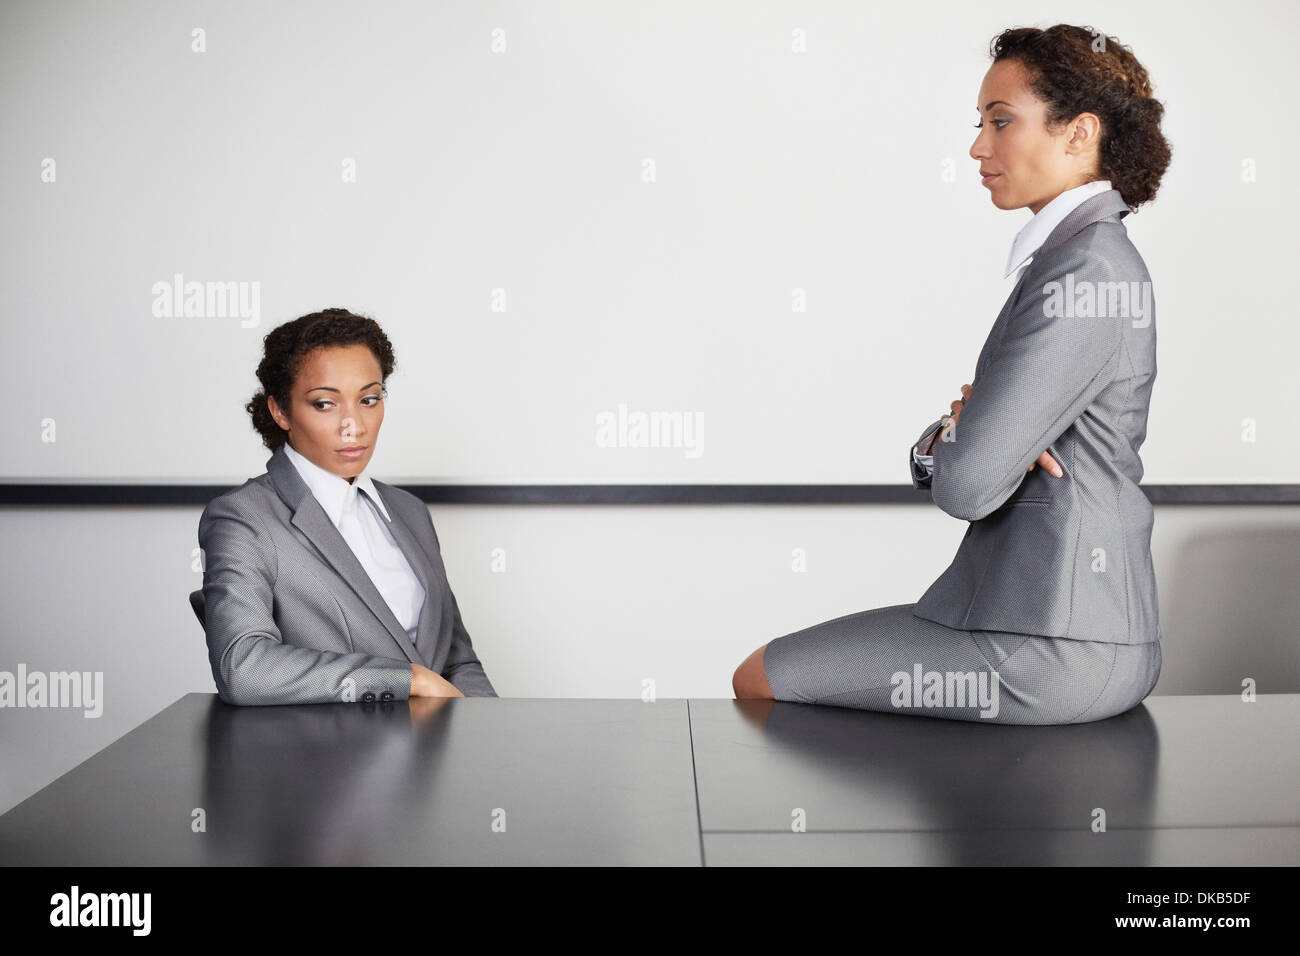 Businesswomen in office, multiple image Stock Photo